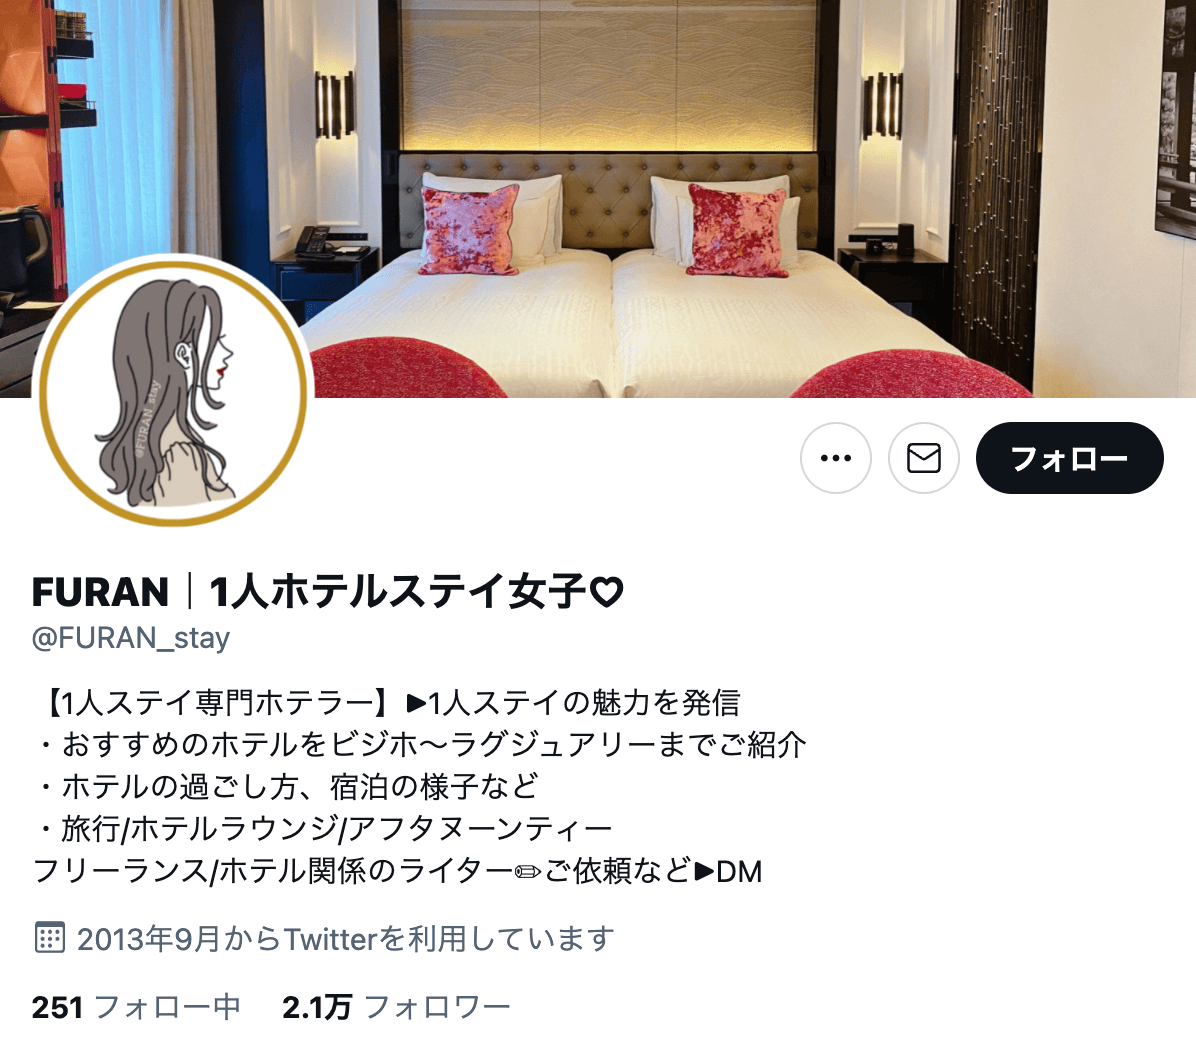 twitter-hotel-ryokan-furan_stay